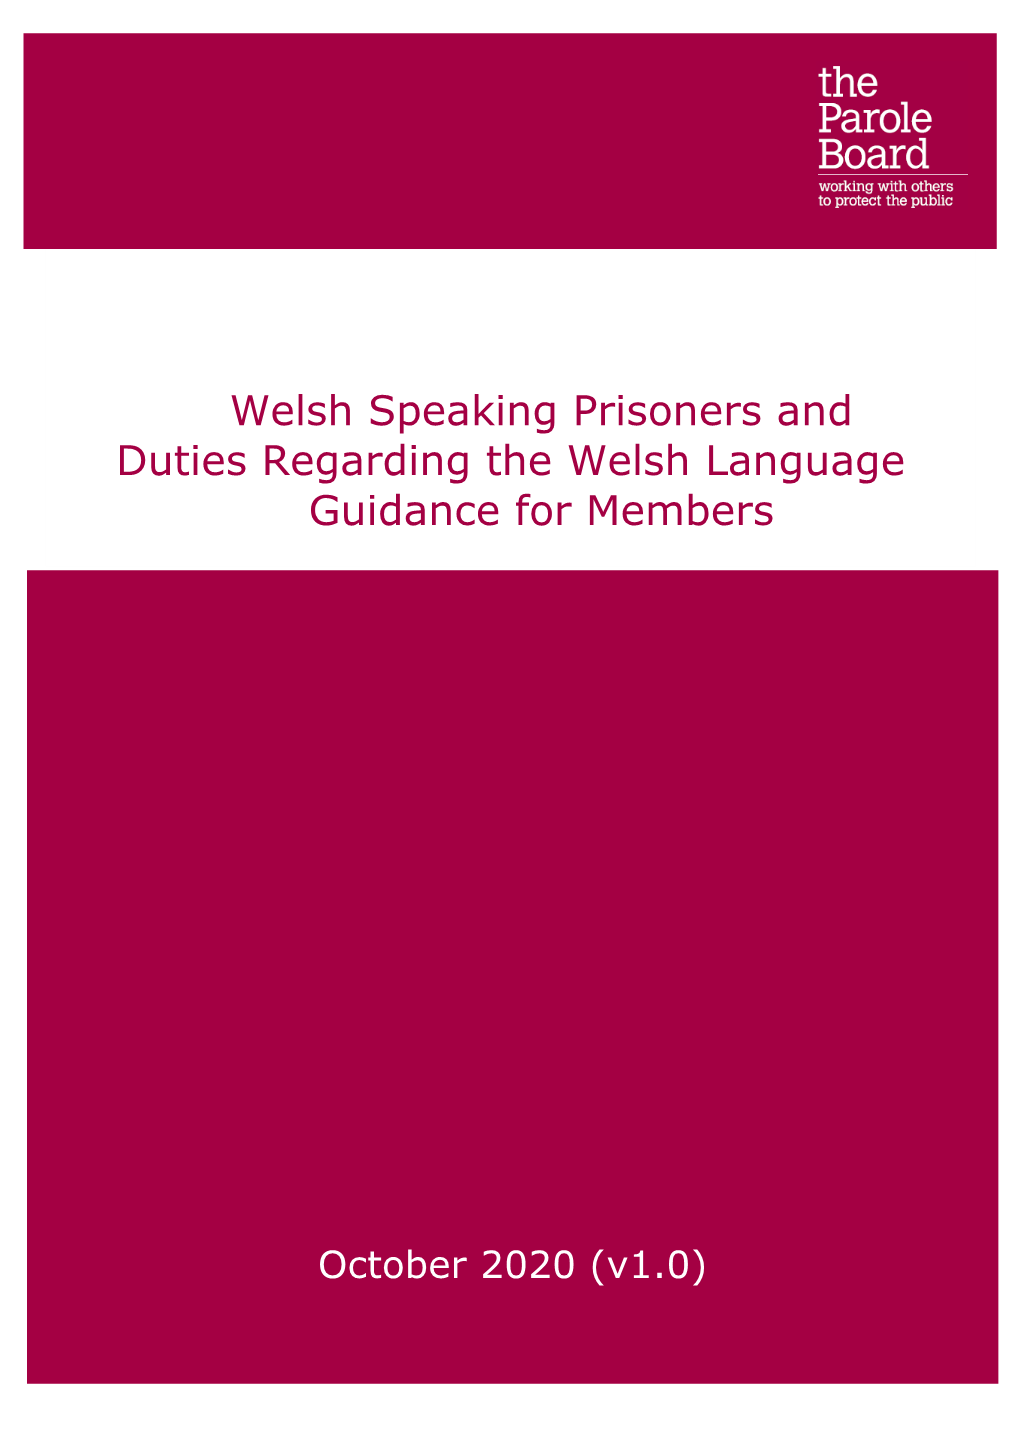 Welsh Speaking Prisoners and Duties Regarding the Welsh Language